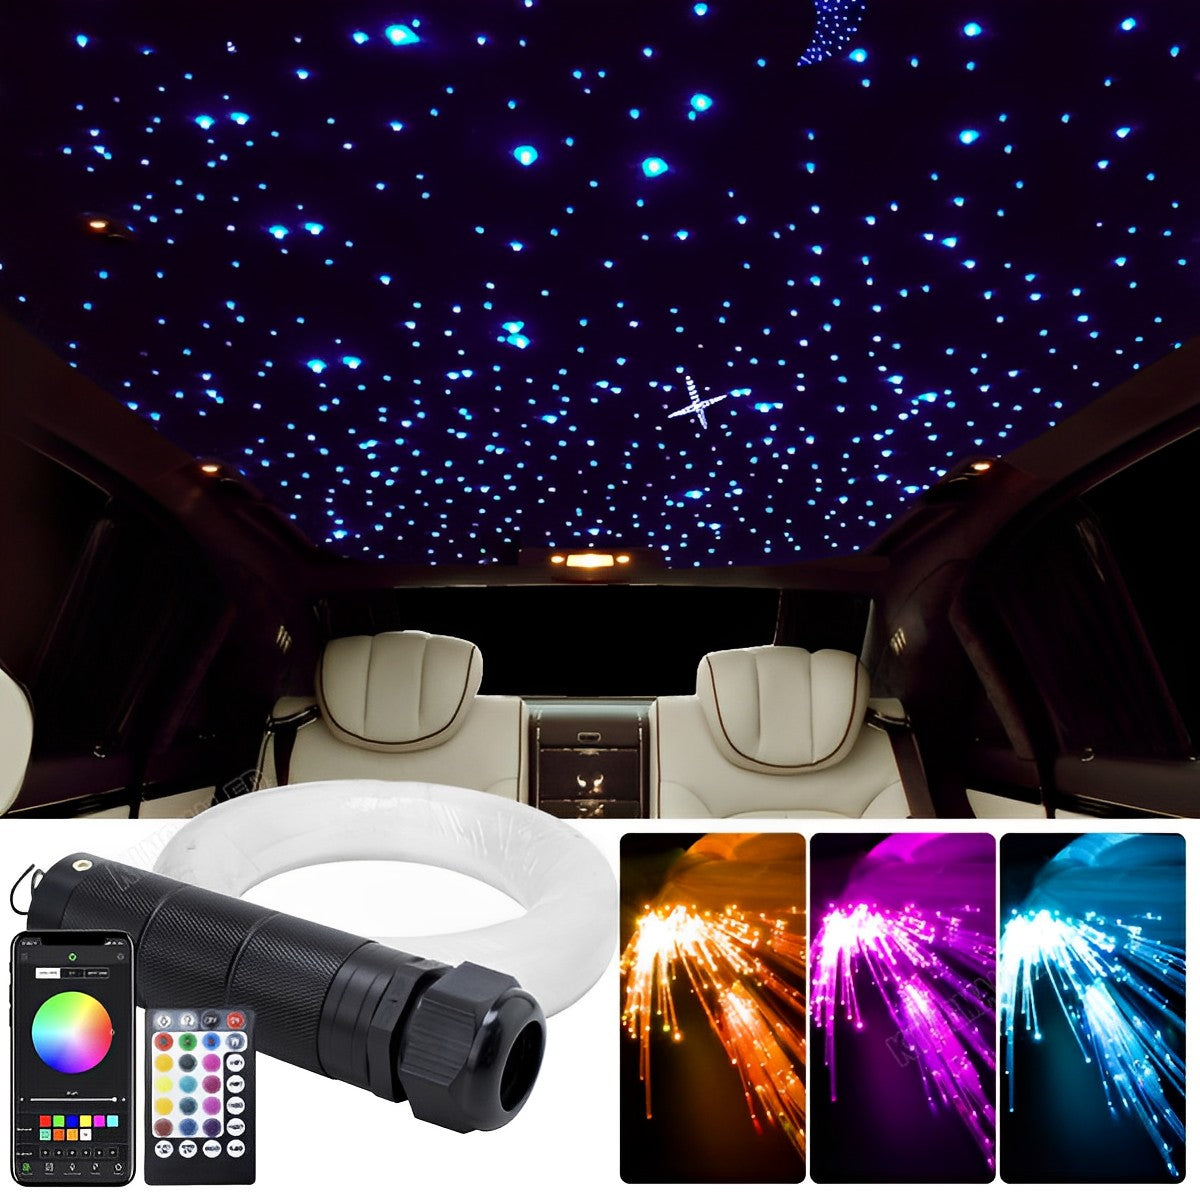 Car Roof Star Light Kit - RGB LED Lights, Multicolor Effects, App